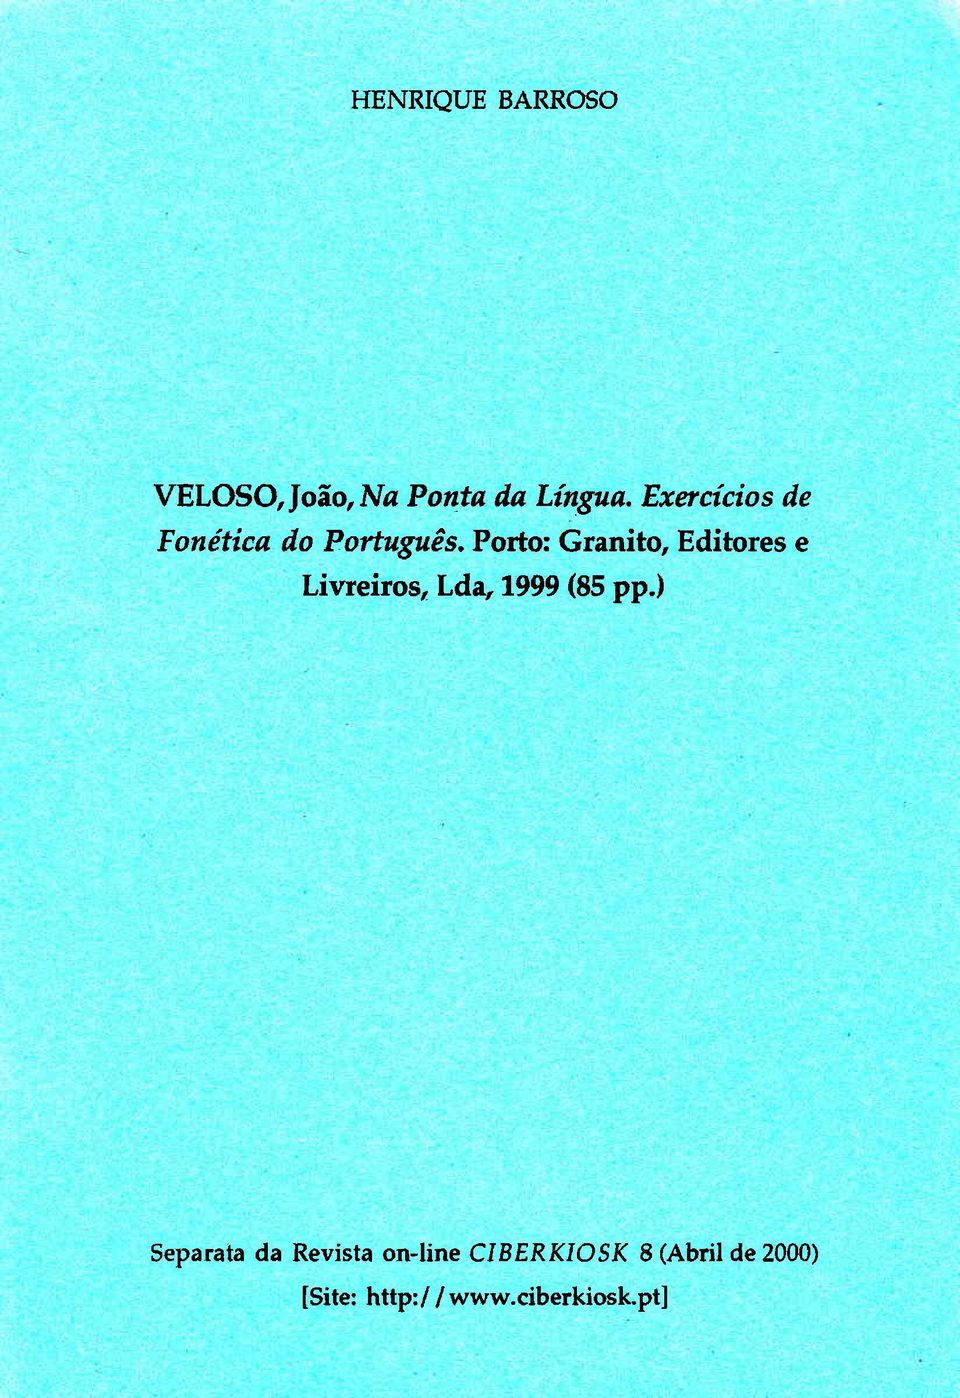 Porto: Granitq Editores e Liweiros, Lda,1999 (85 pp.